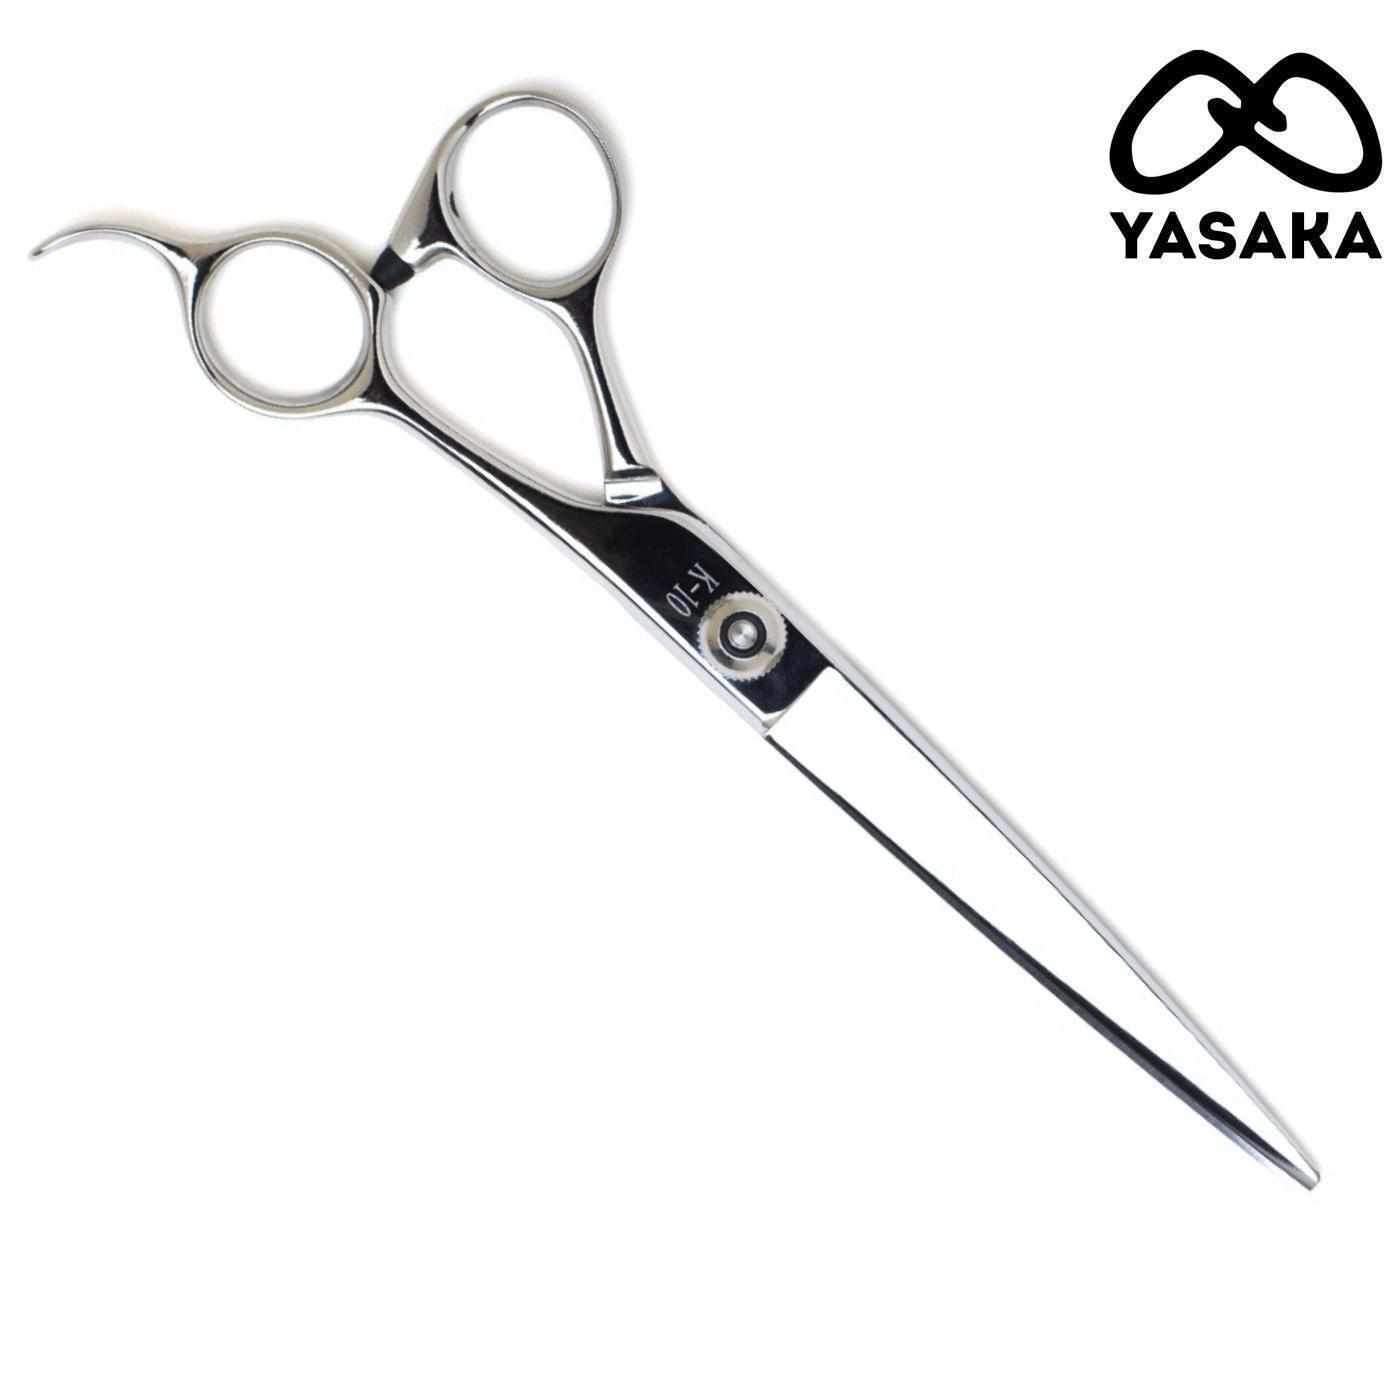 Yasaka Deluxe K-10 7 Inch Barber Scissors - Japan Scissors USA